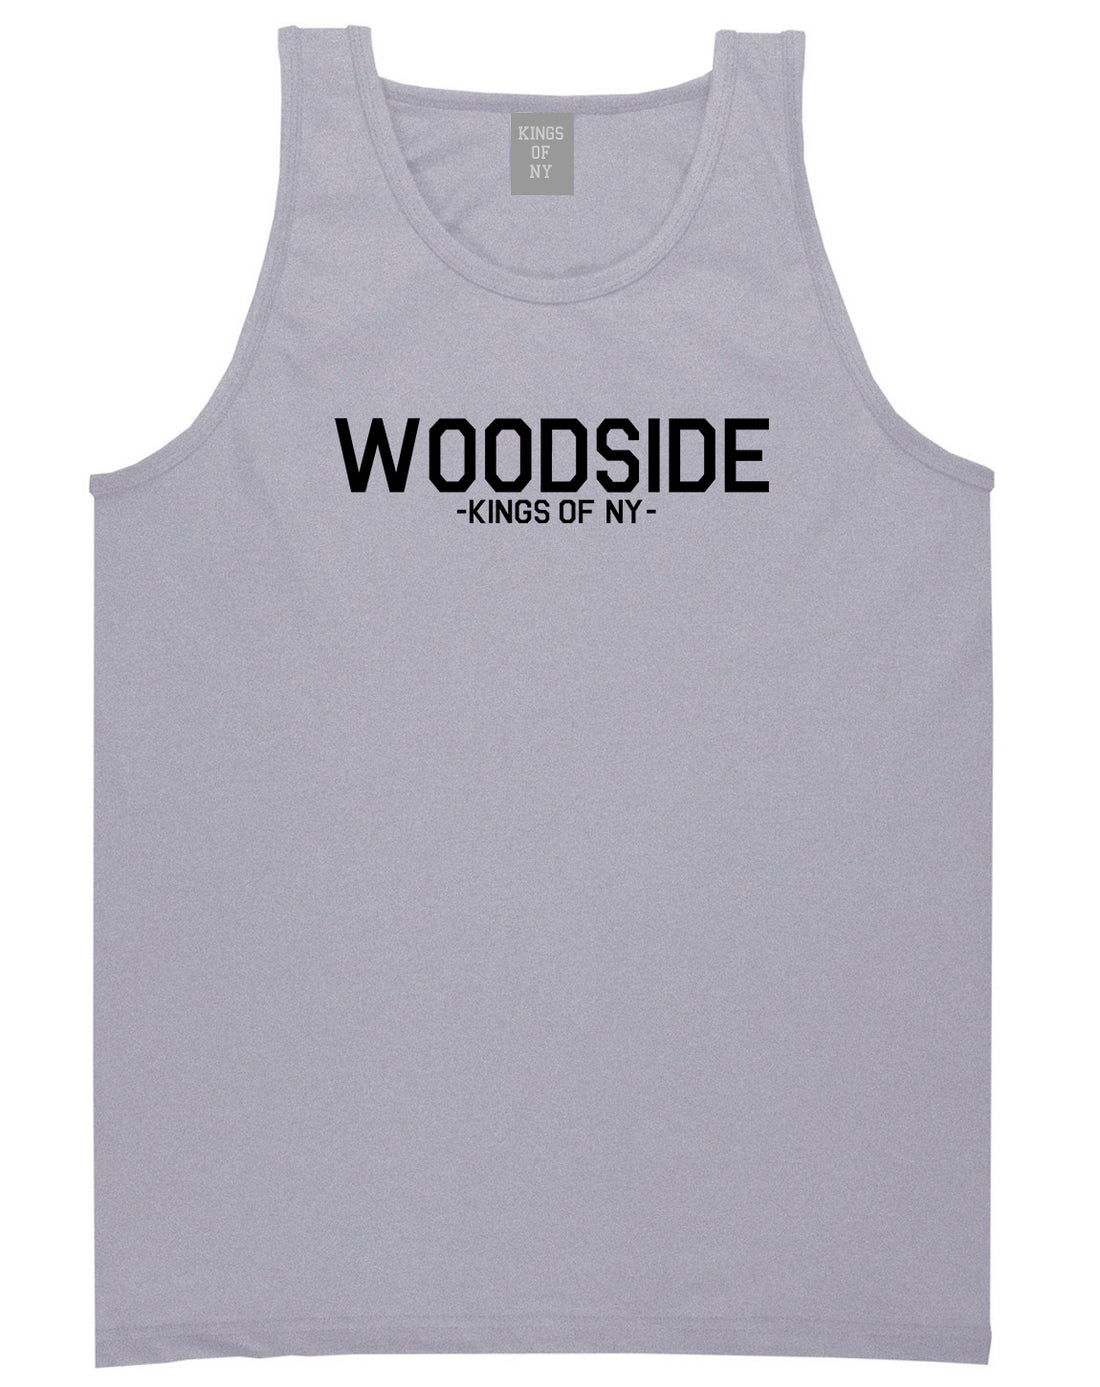 Woodside Queens New York Mens Tank Top Shirt Grey